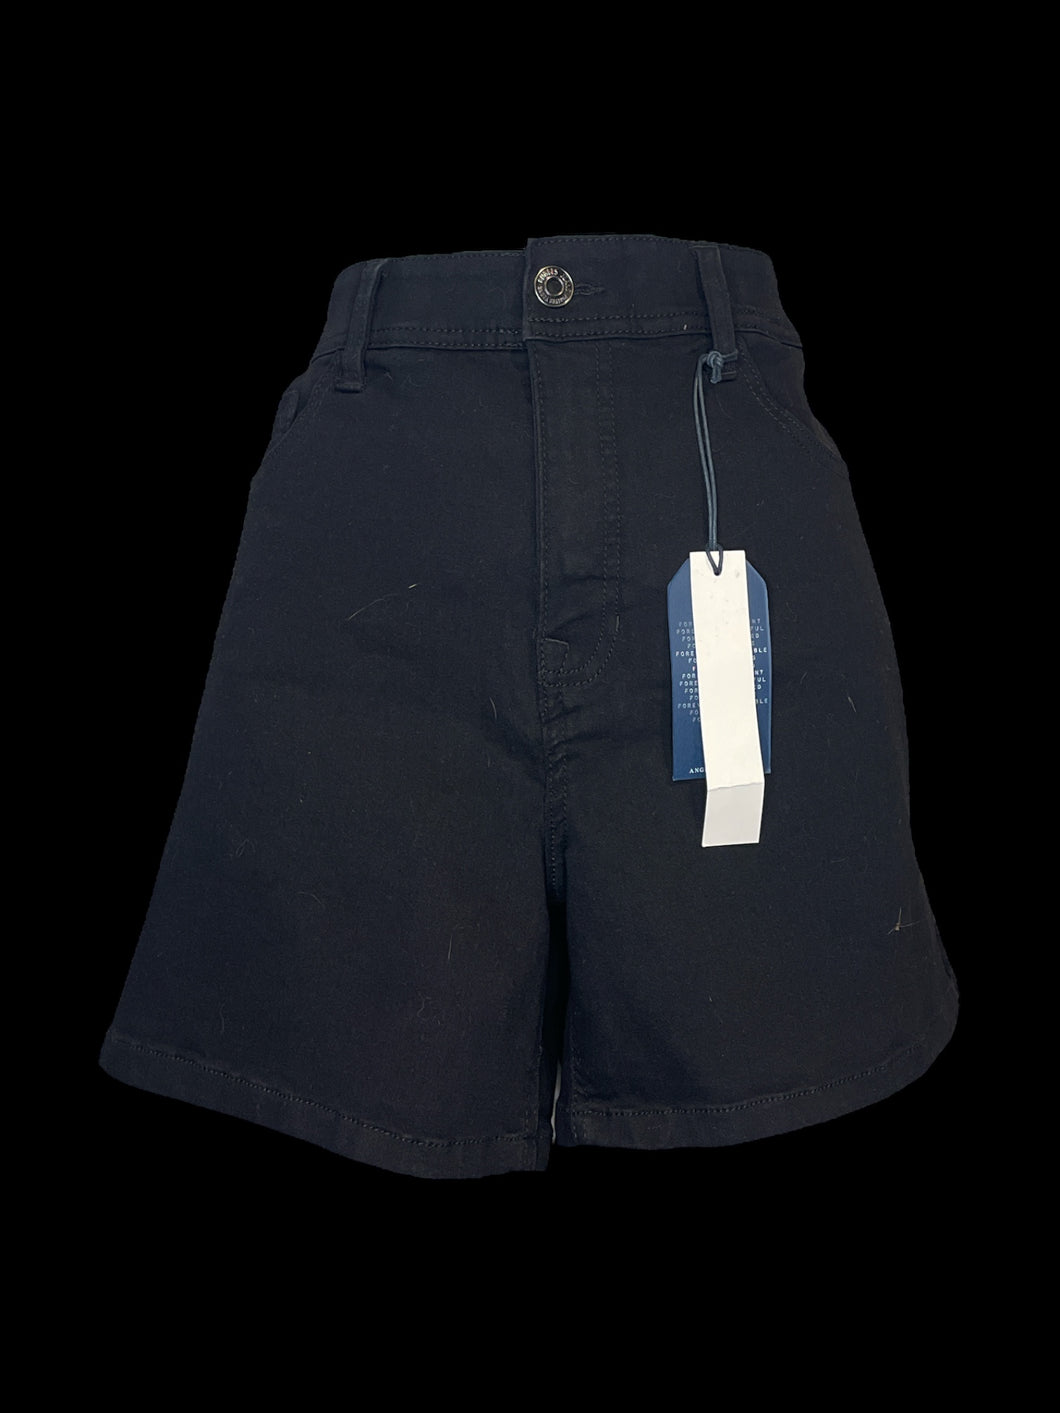 XL NWT Black cotton blend high rise shorts w/ elastic waist, belt loops, pockets, & button/zipper closure